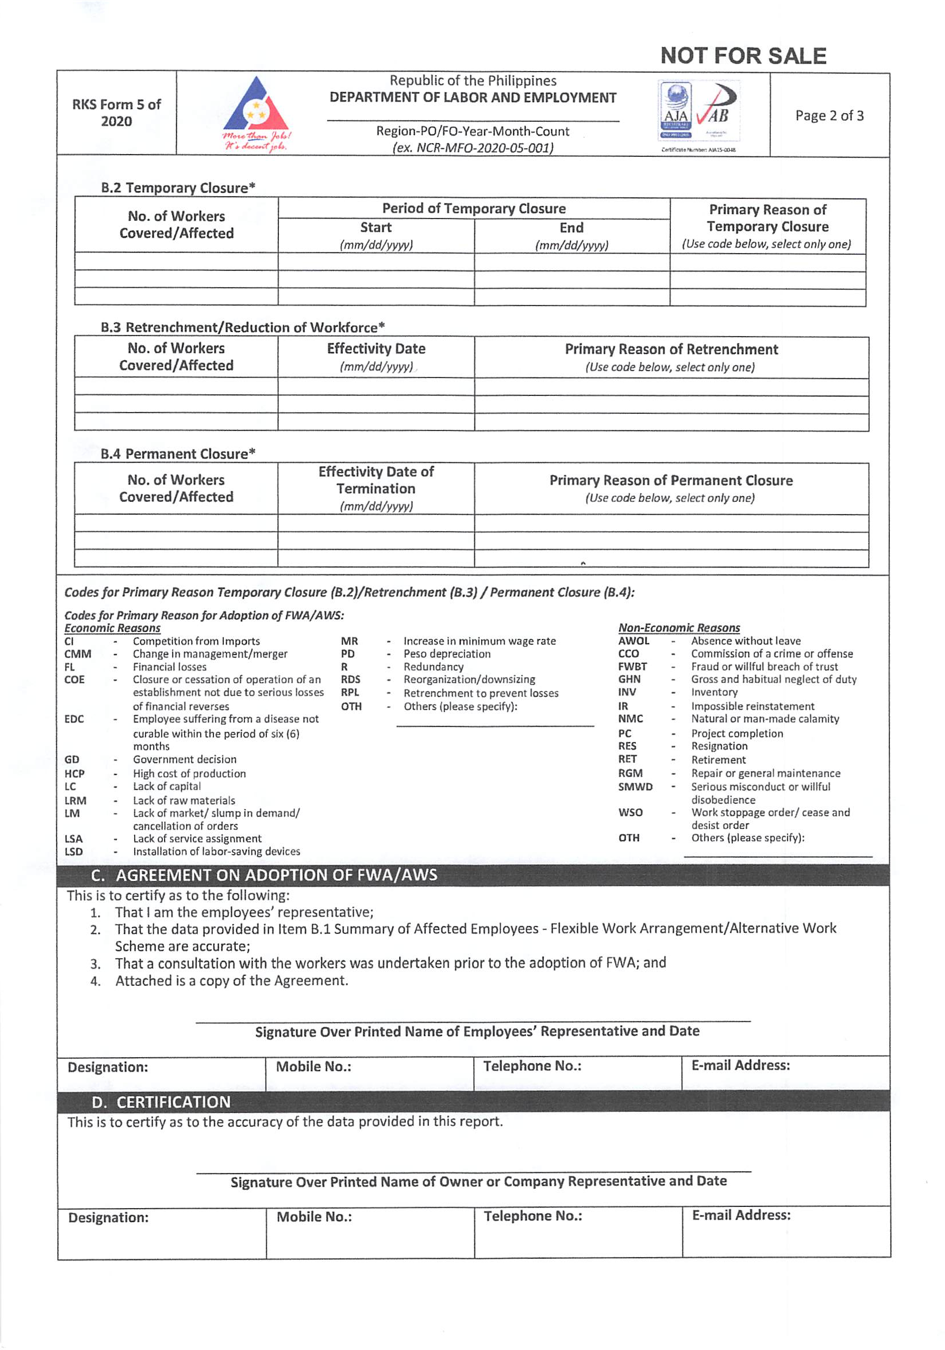 Establishment Report Form (RKS Form 5) page 2